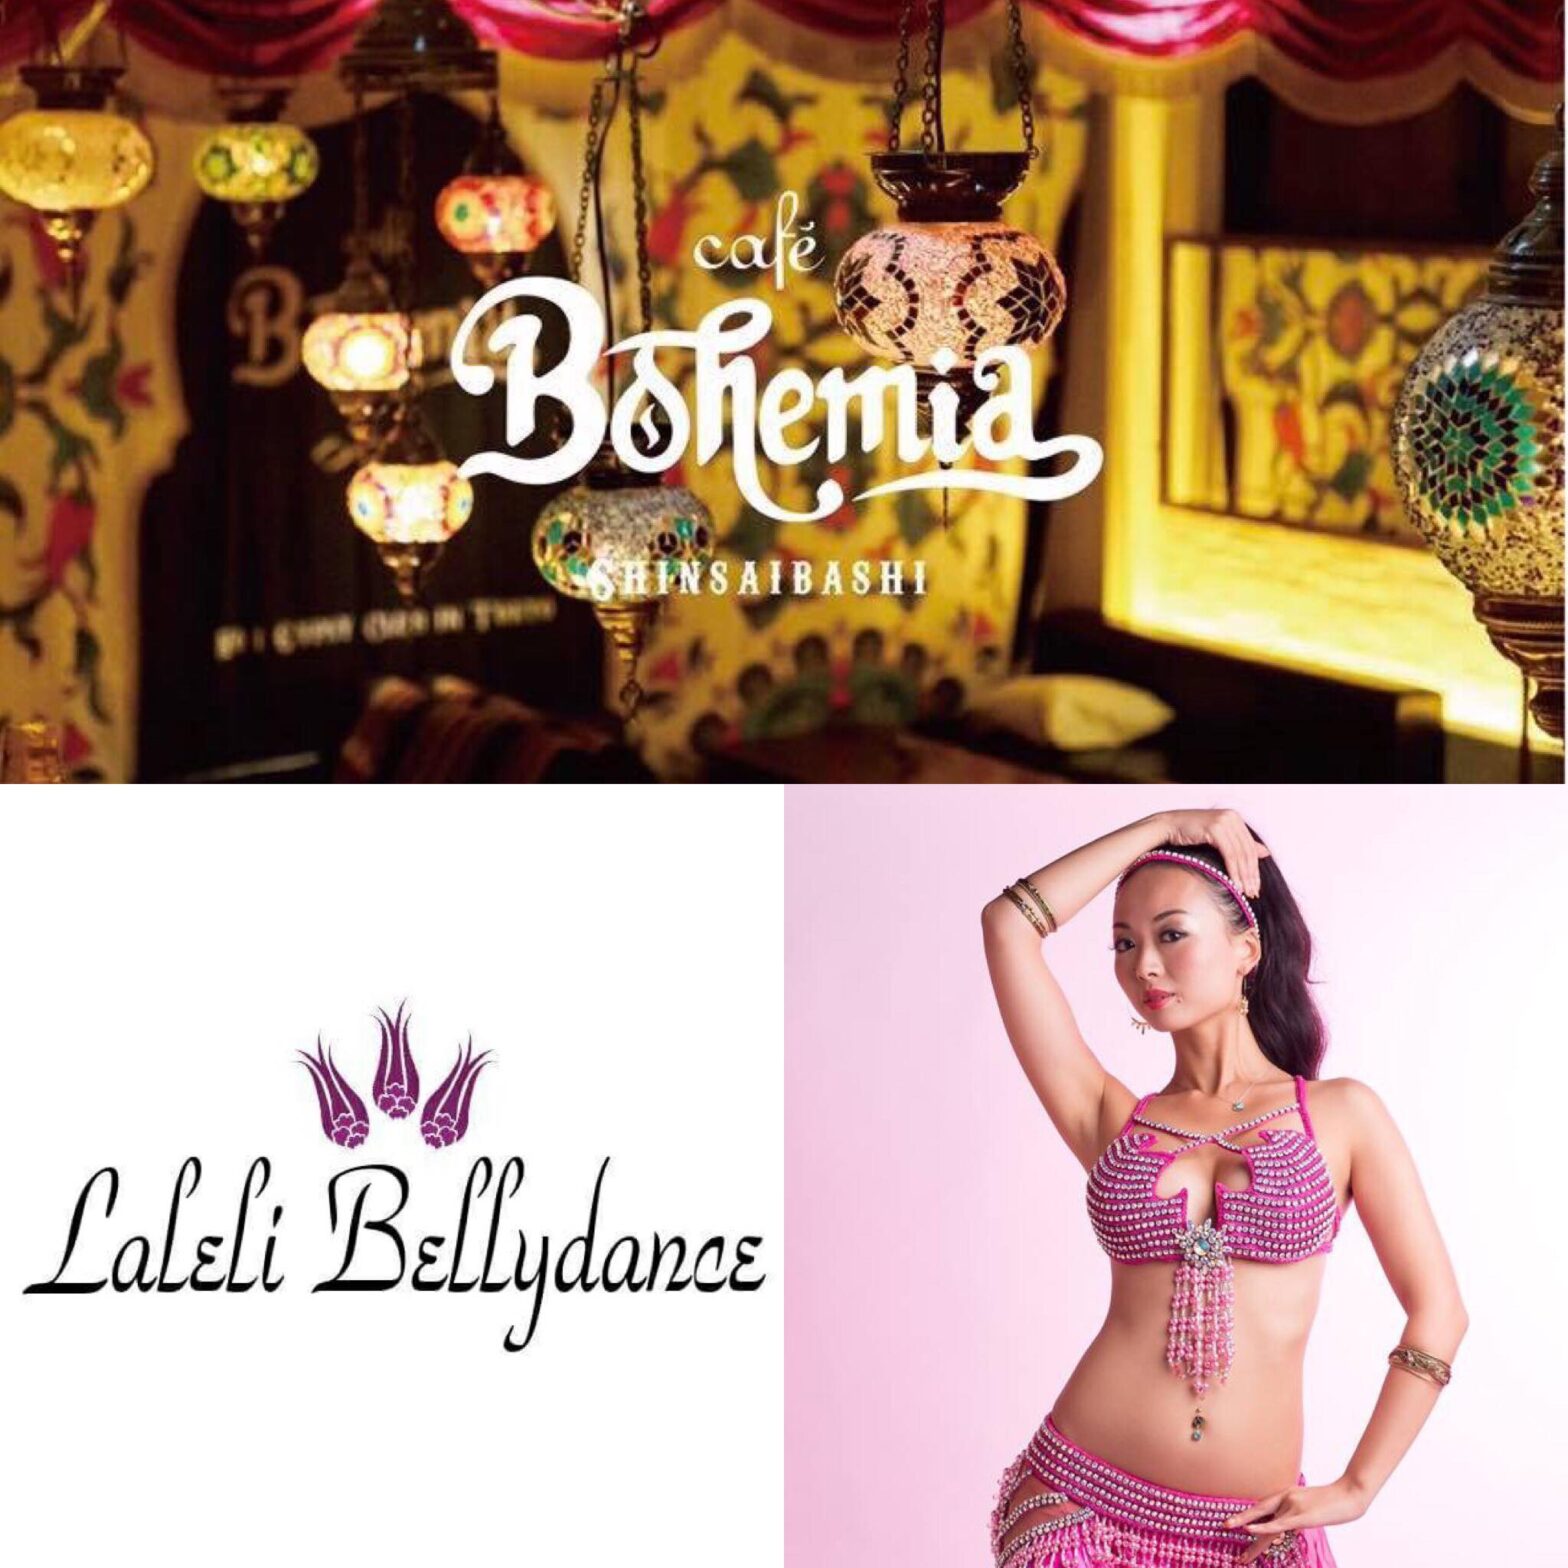 2018.1.23 Cafe Bohemia +Laleli Bellydance Cecilia